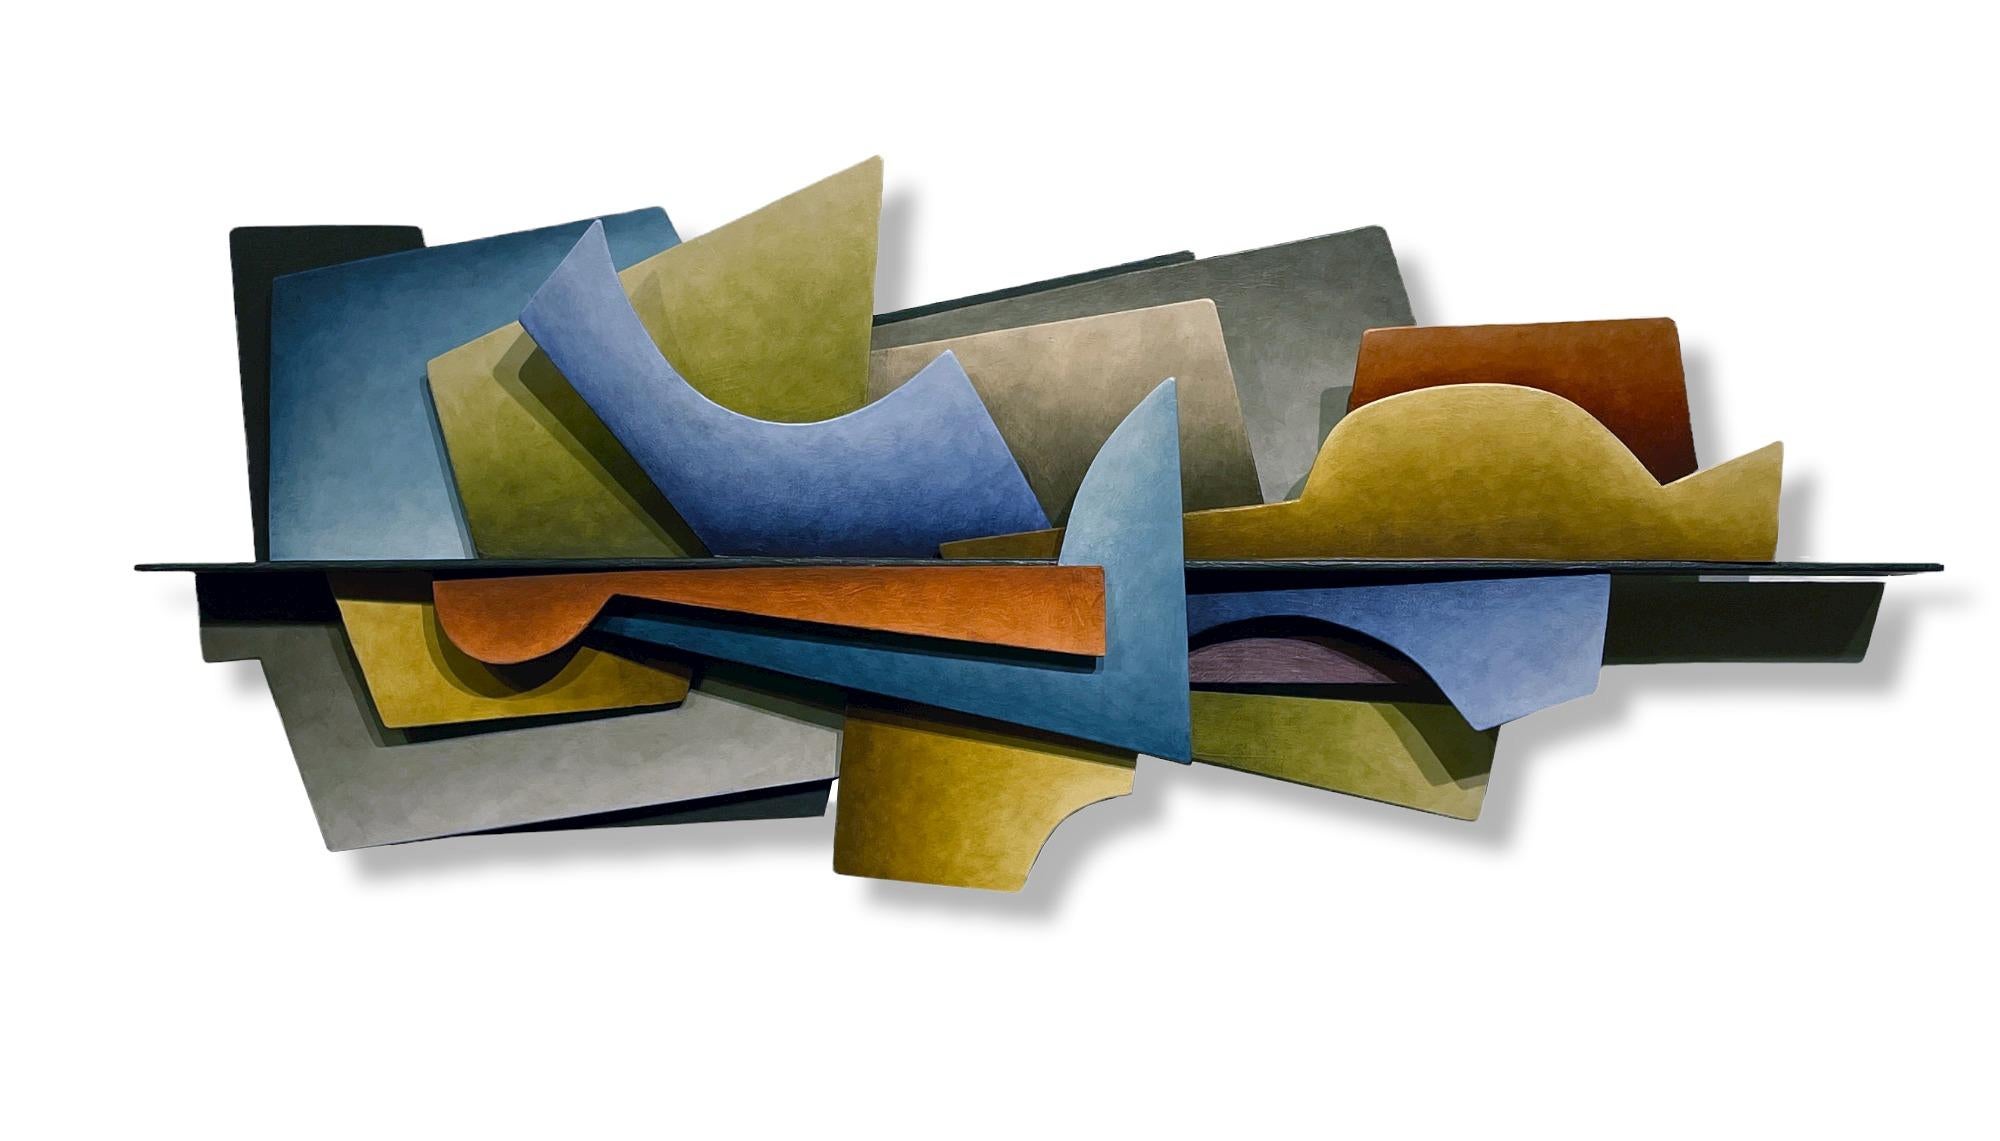 Gewebter Pflanzgefäß – abstrakte geometrische Form, handbemalte Wandskulptur aus geschweißtem Stahlblech  – Mixed Media Art von Chris Hill